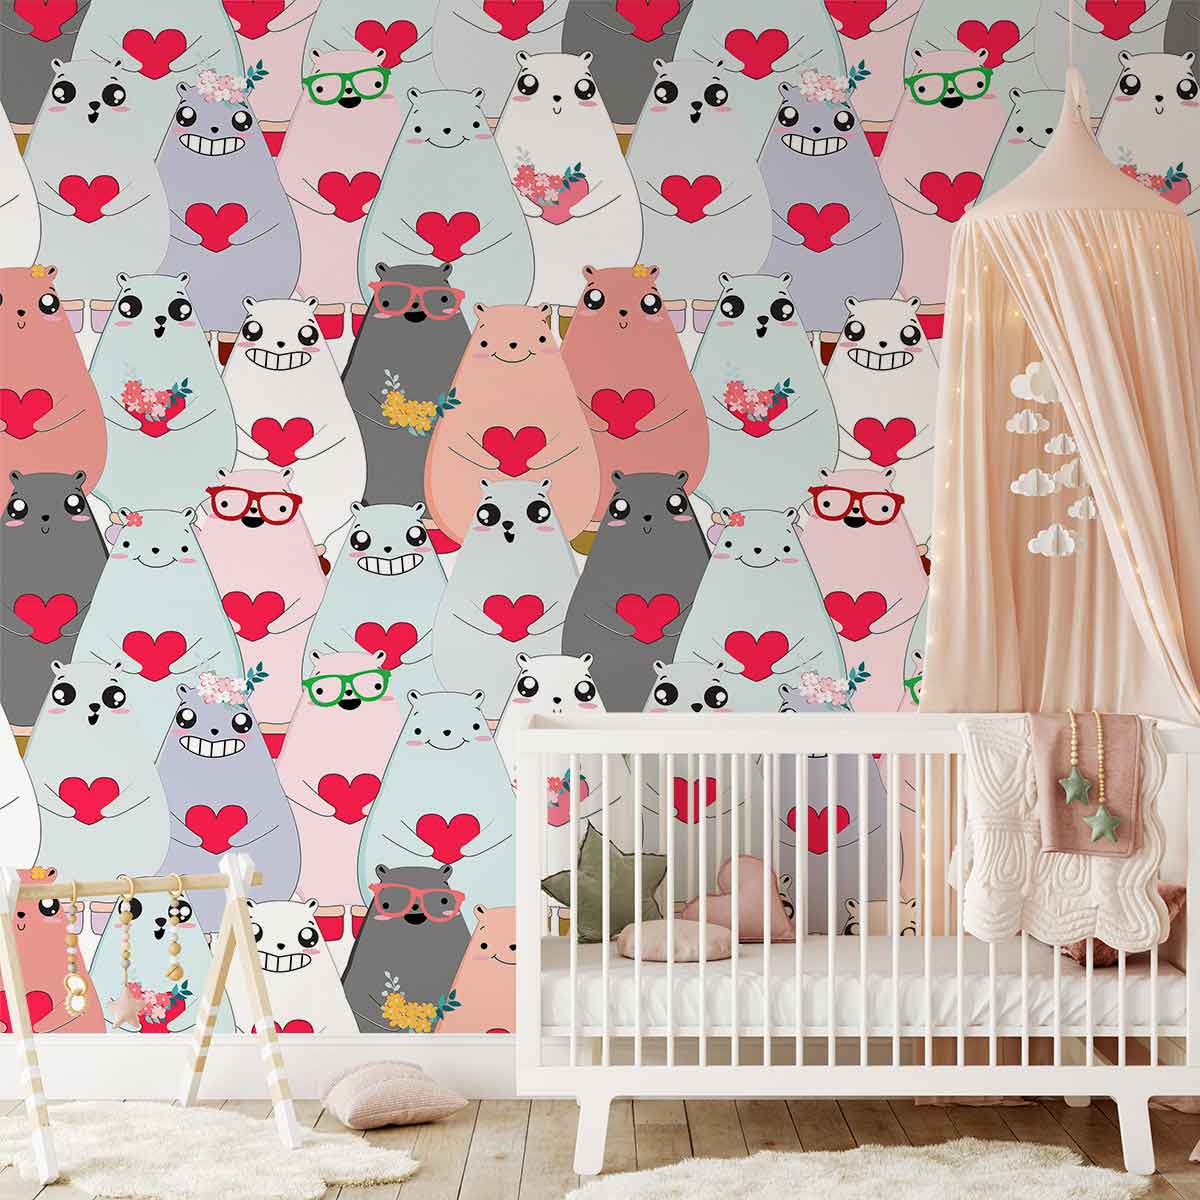 adorable cartoon bears wallpaper mural for nursery room